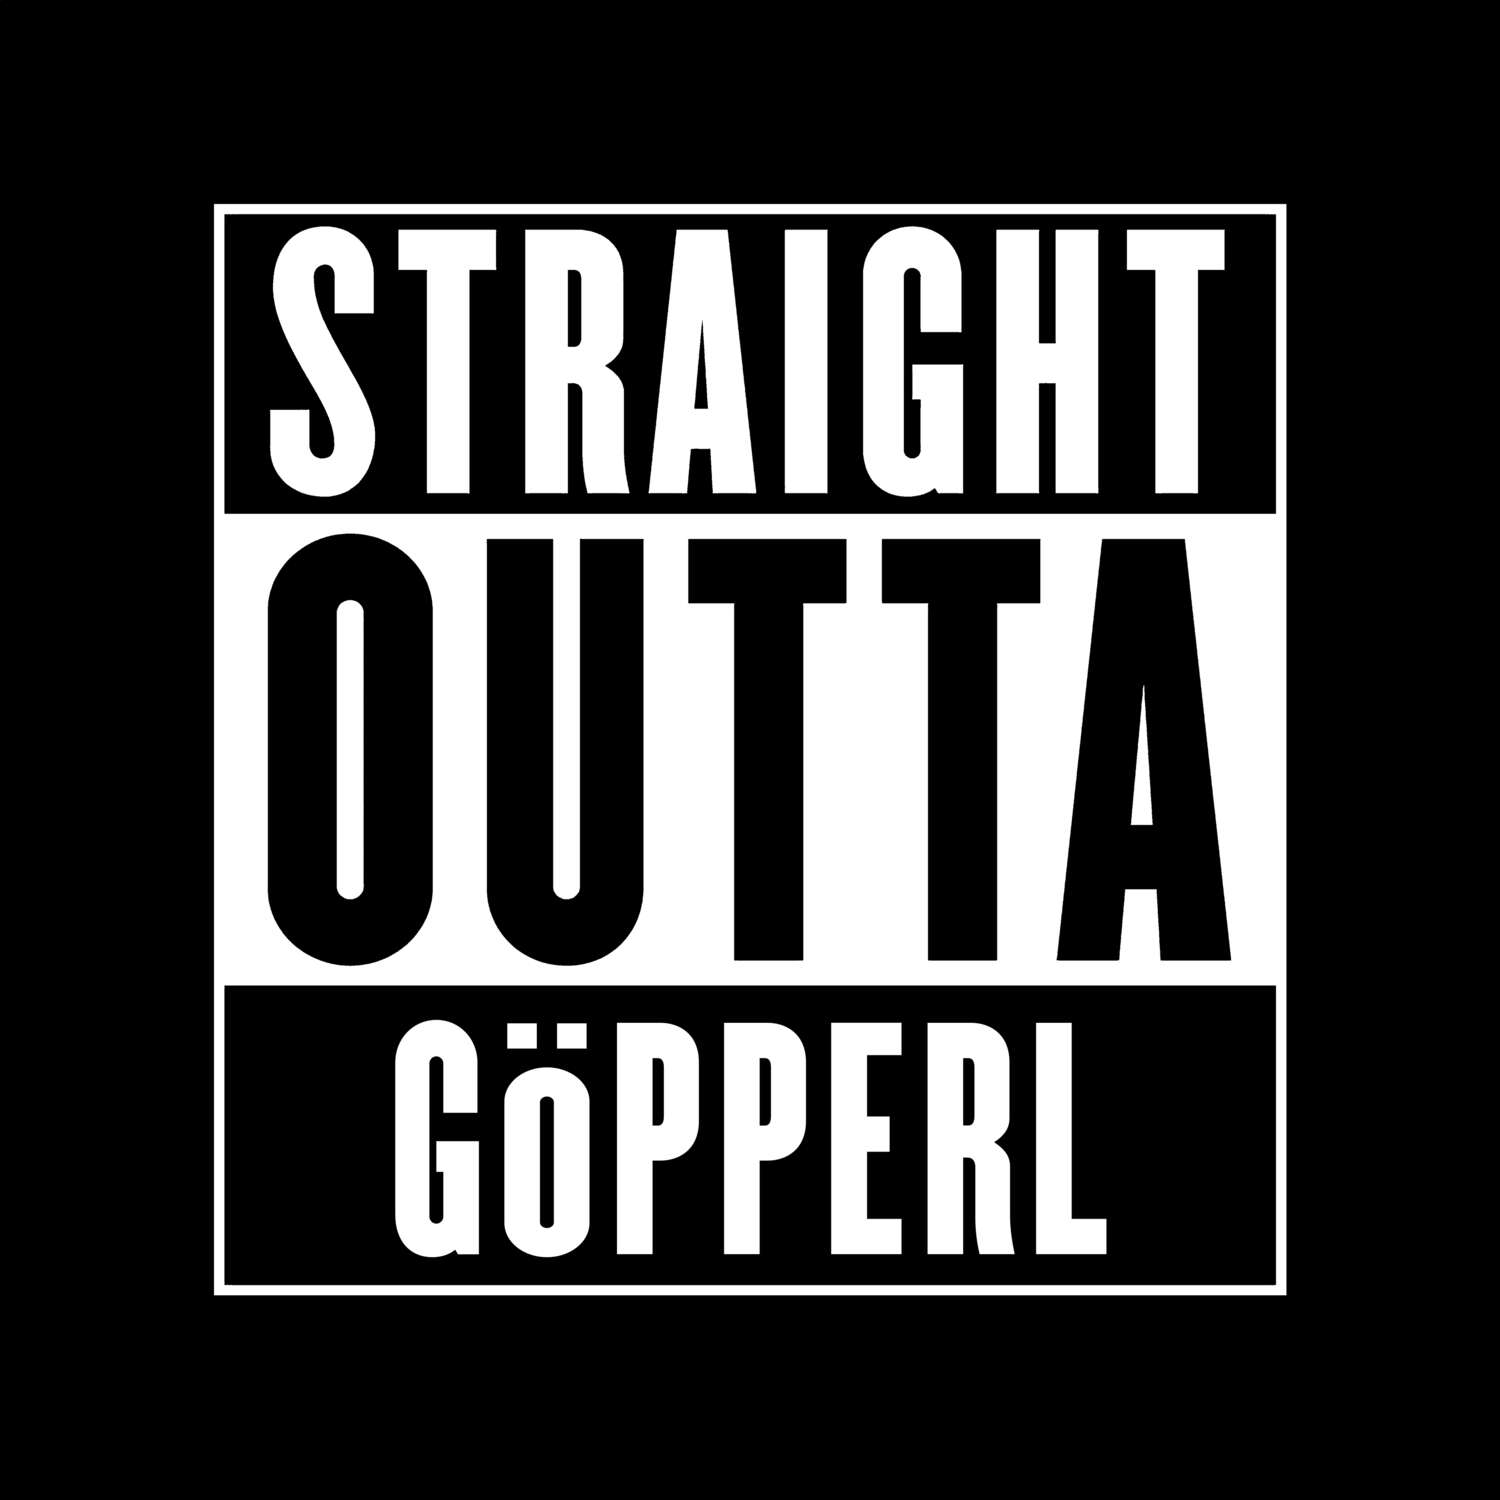 Göpperl T-Shirt »Straight Outta«